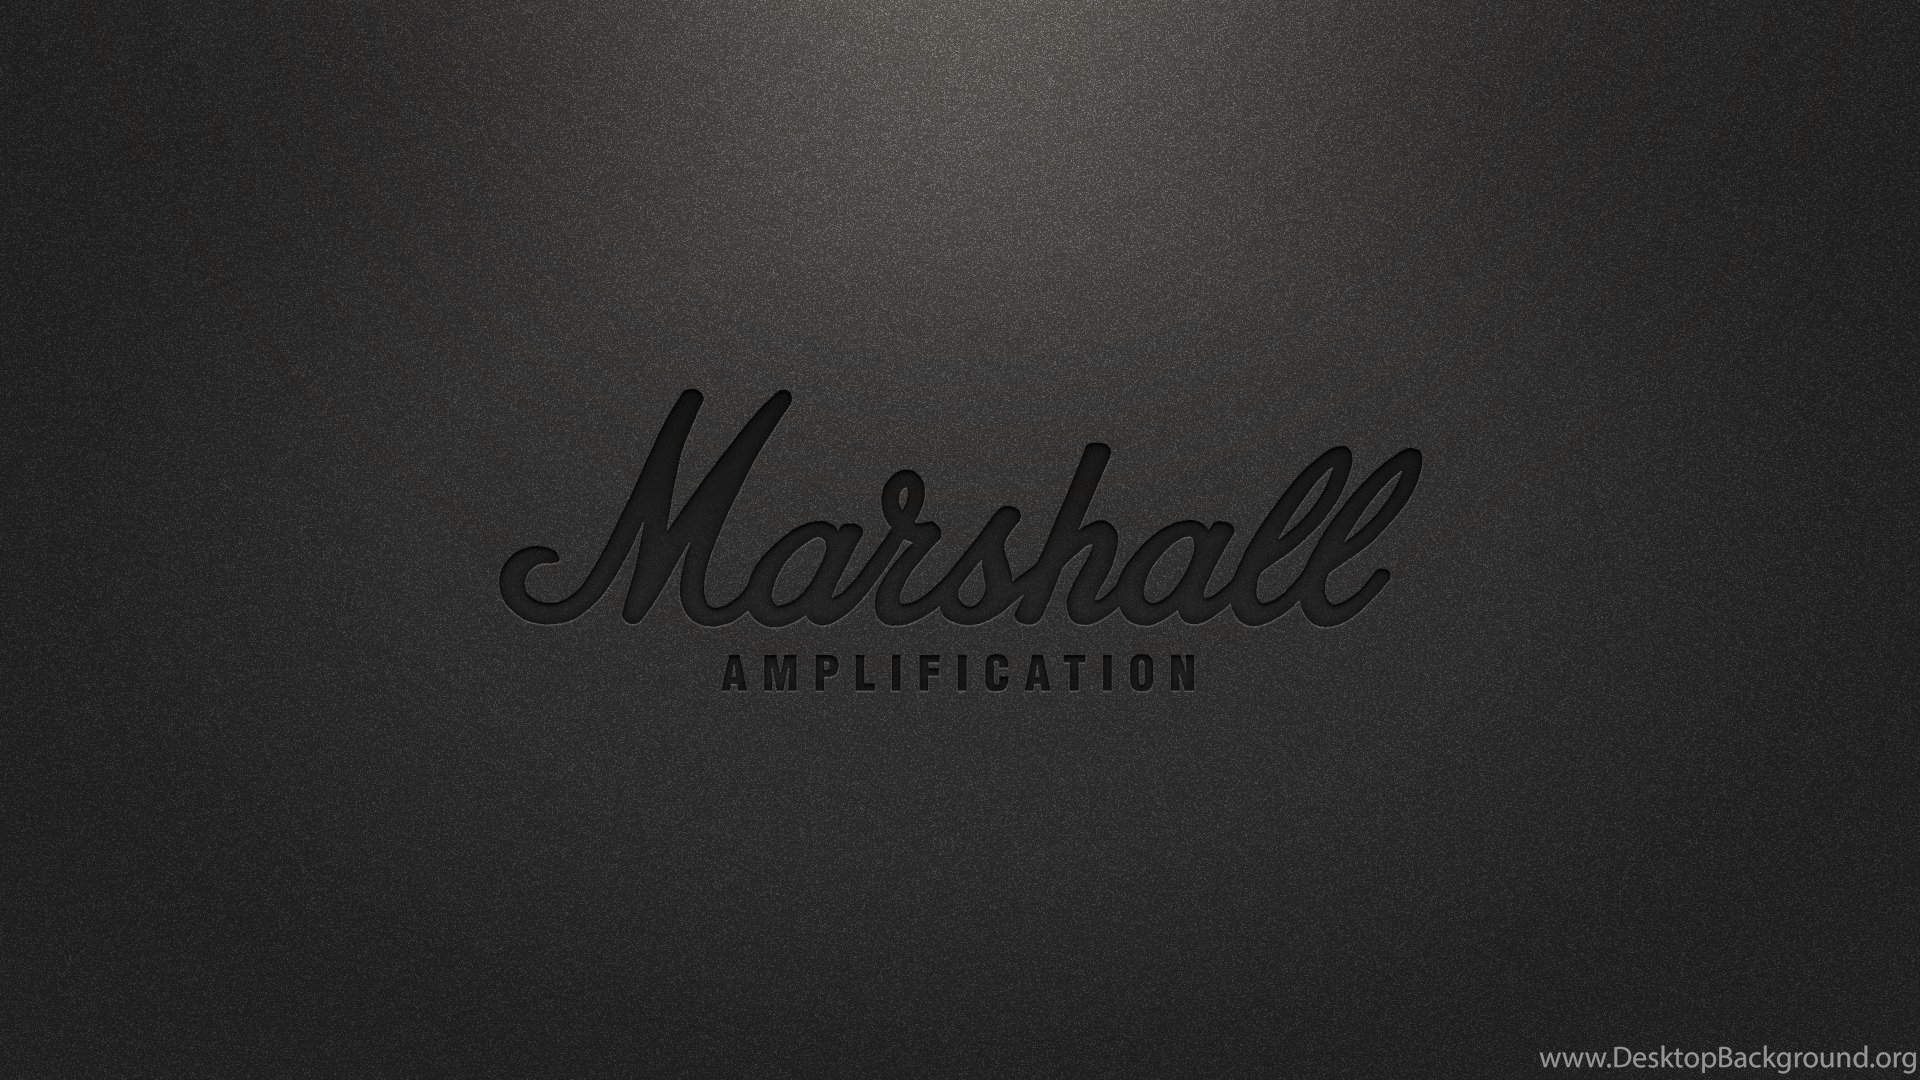 Marshalls Wall Wallpapers HD/3D Wallpaper for Wall | Best Designer Textured  Wallpaper for Kitchen, Bedroom, Living Room Online